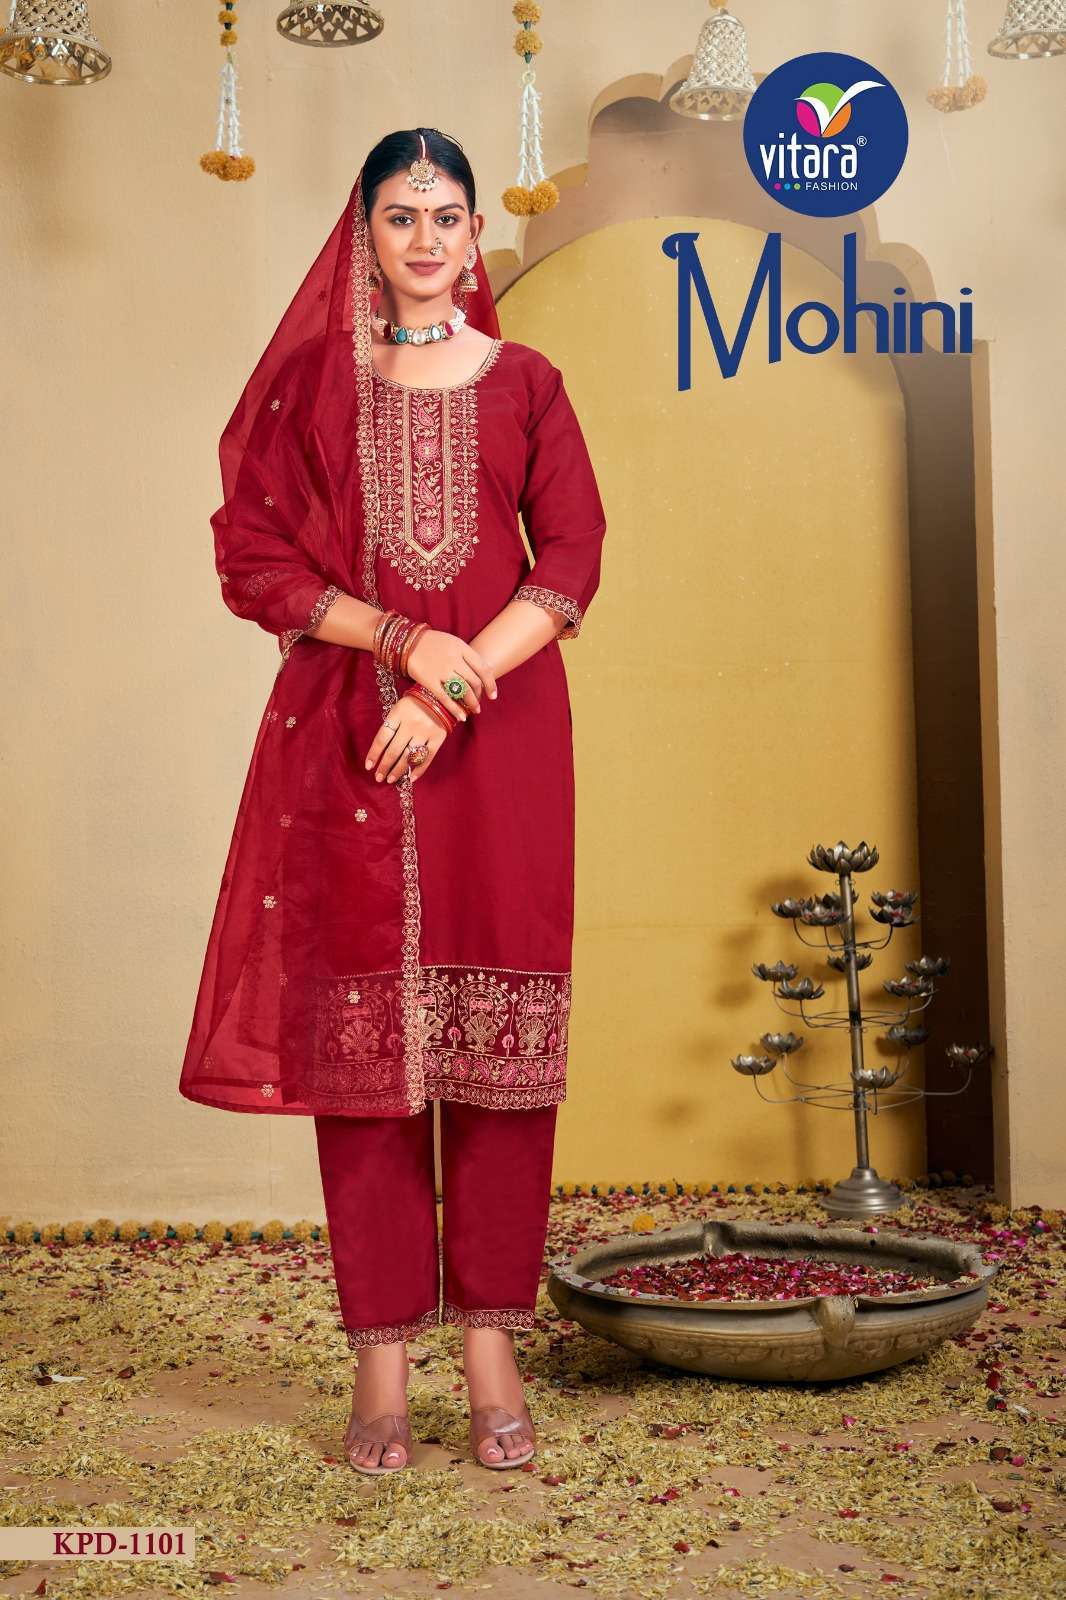 Vitara Fashion Mohini Vol -1 Branded Kurti Manufacturer In Surat